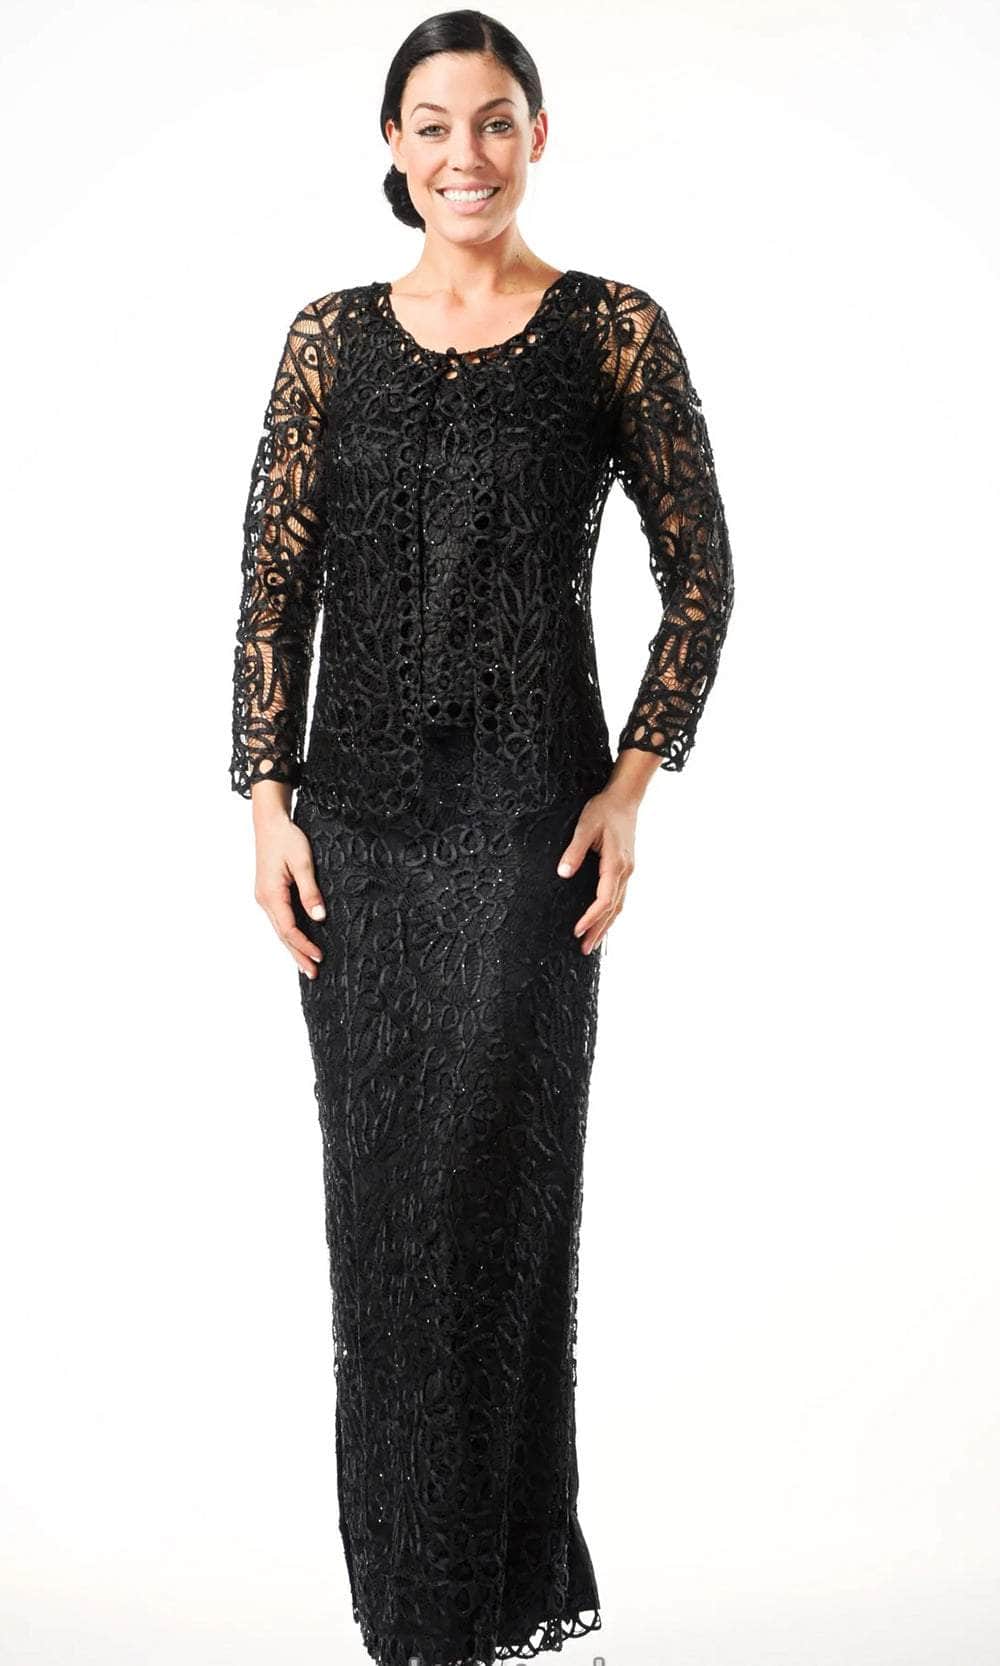 Soulmates C12551 - Signature Crochet Three Pieces Evening Gown Evening Dresses Black / S